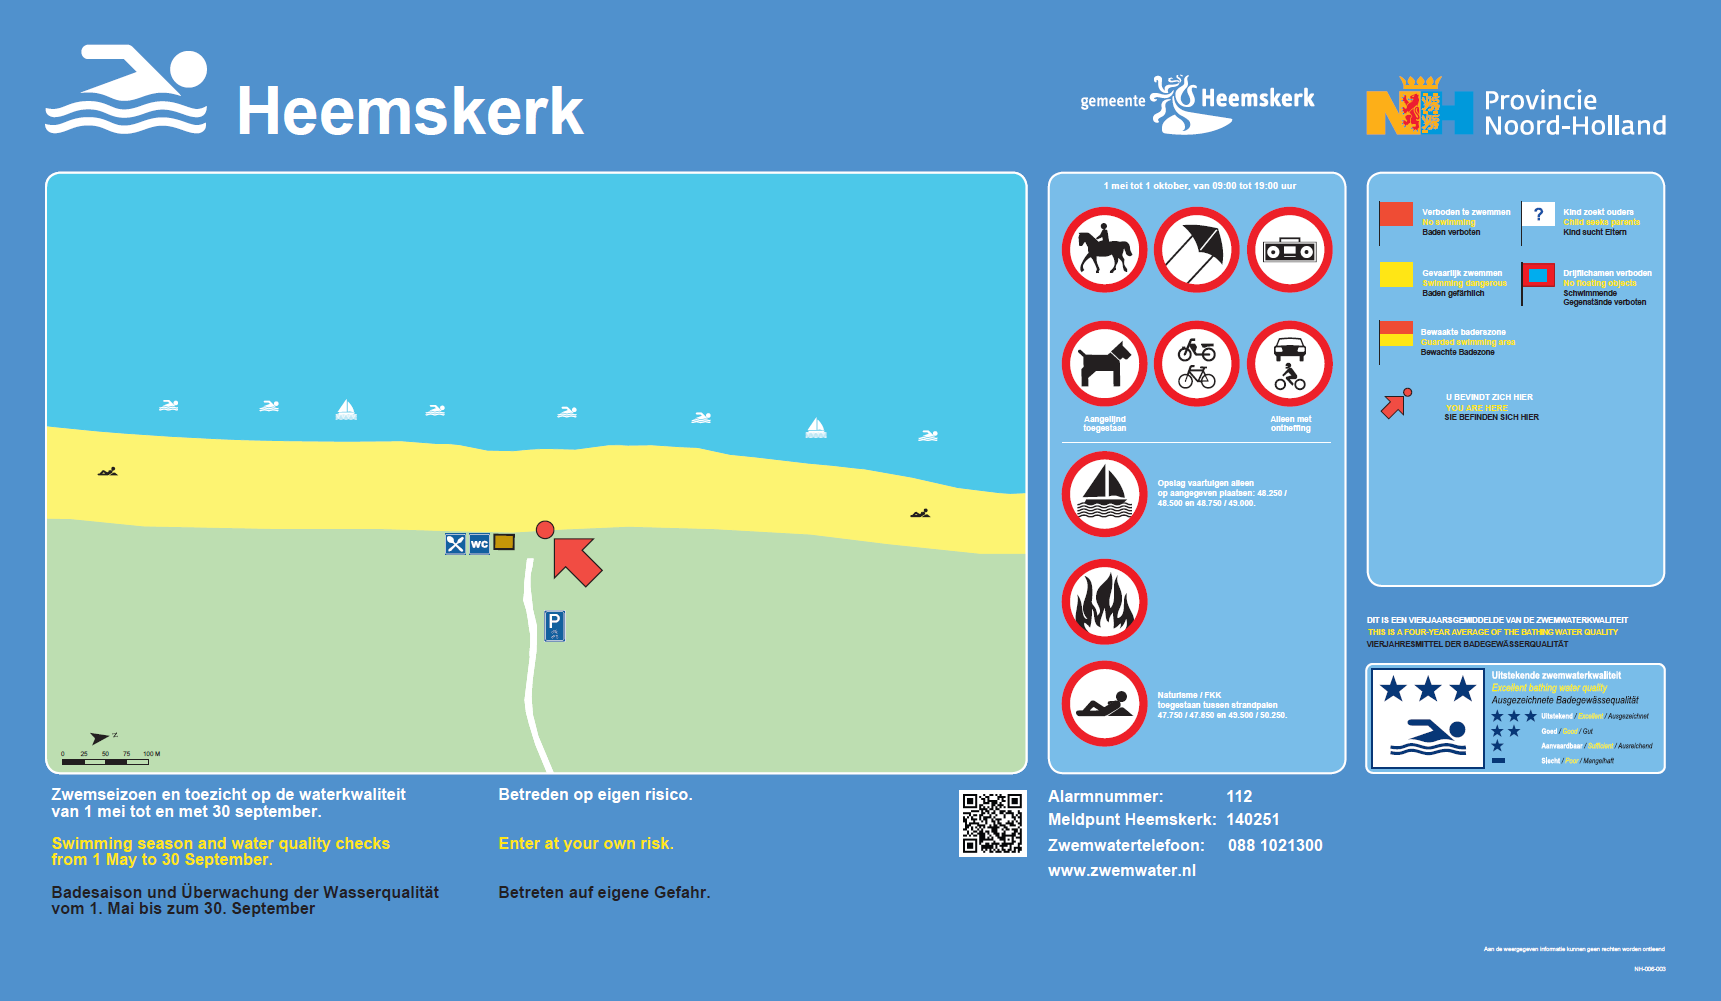 The information board at the swimming location Heemskerk, Zwarte weg